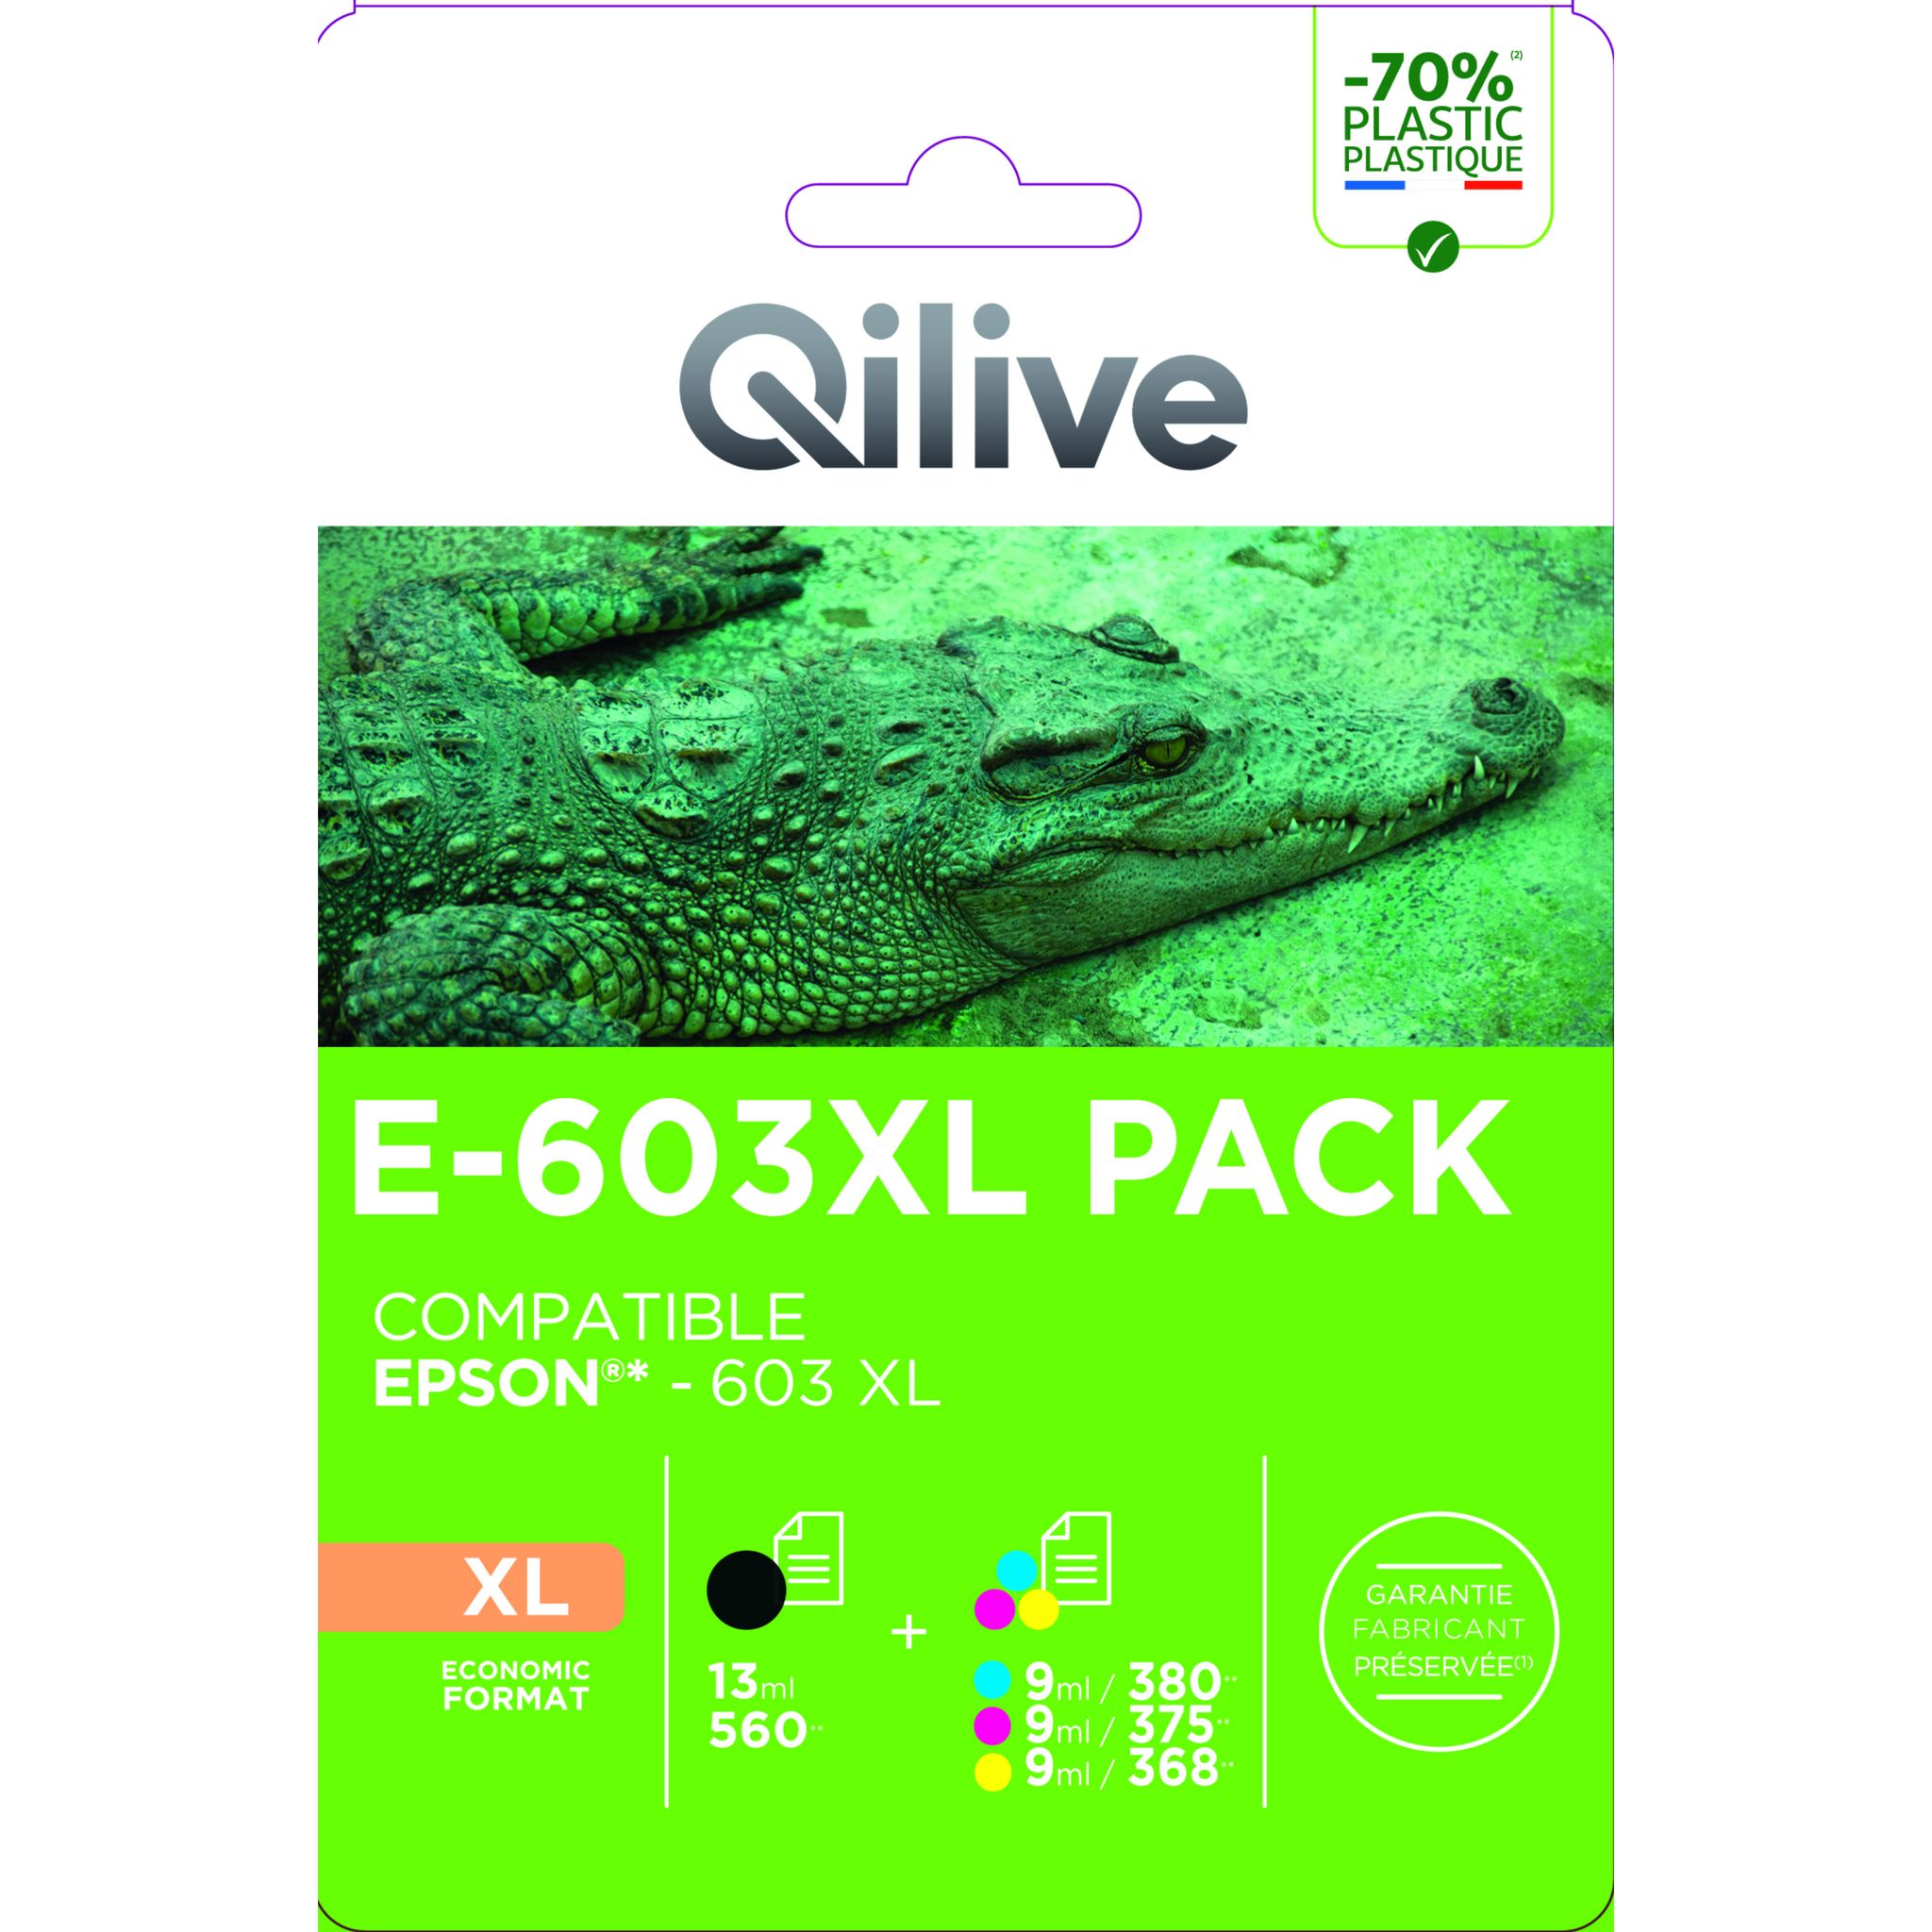 Epson 603 XL pack + 2 cartouche 603 XL NOIR